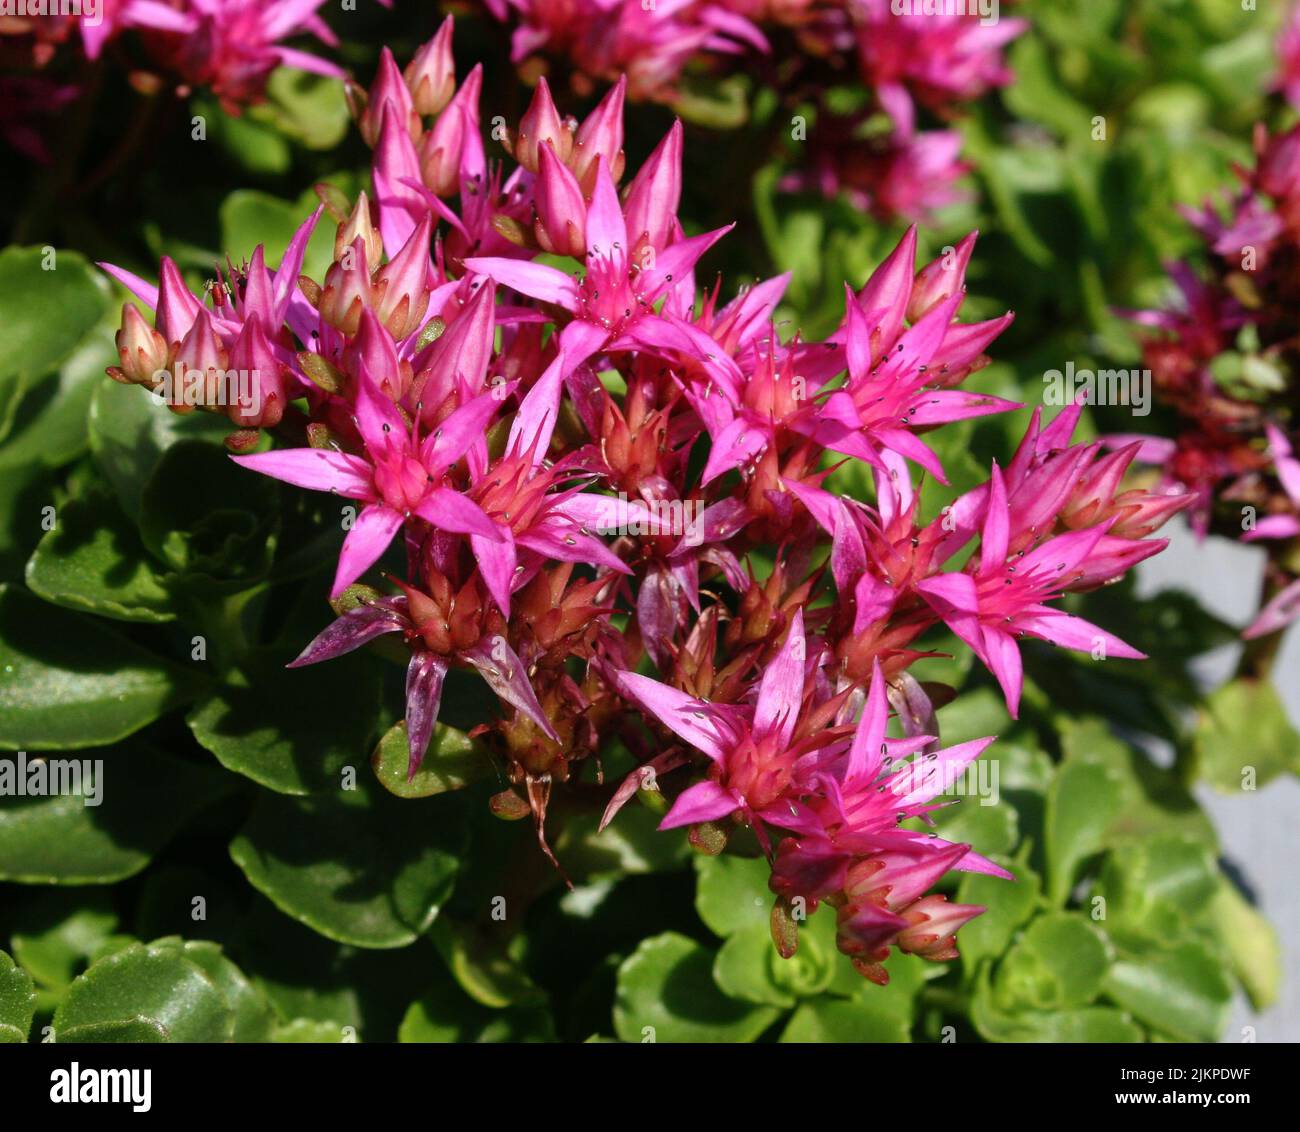 Bright pink flowers of Caucasian stonecrop or two-row stonecrop (Sedum spurium) close up Stock Photo